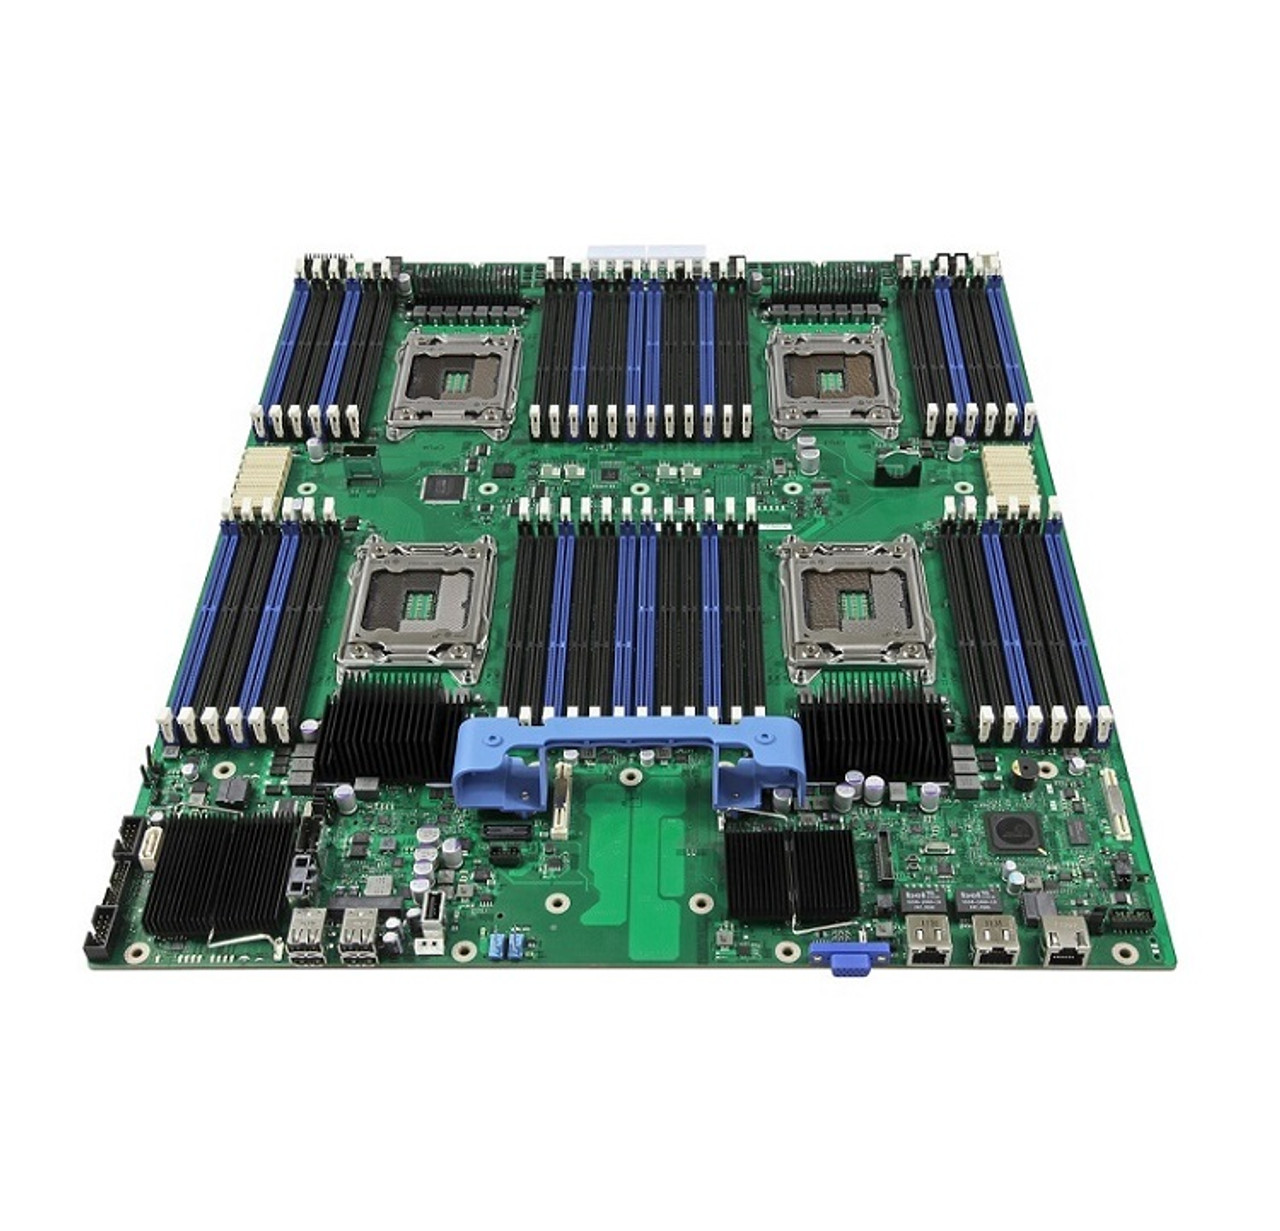 0M3849 - Dell System Board (Motherboard) for Precision Workstation 370 (Refurbished)